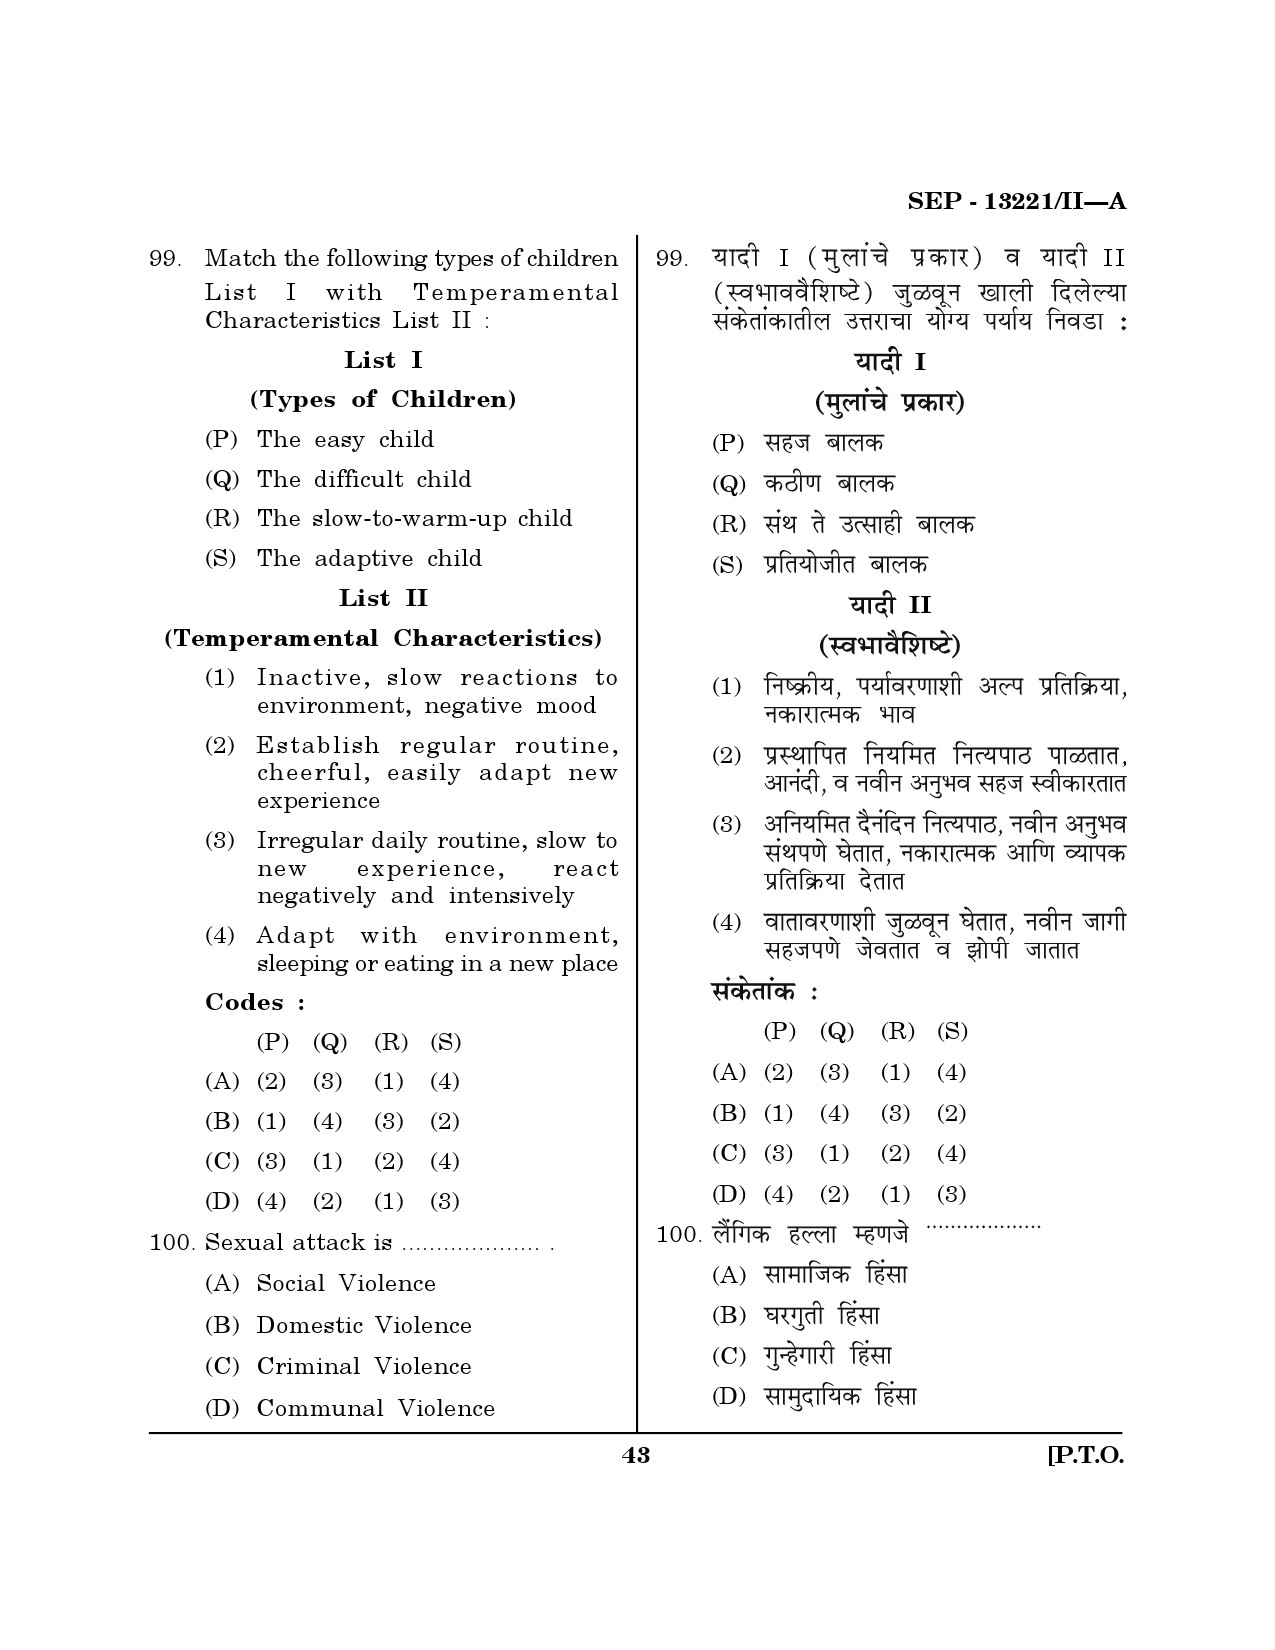 Maharashtra SET Psychology Exam Question Paper September 2021 42